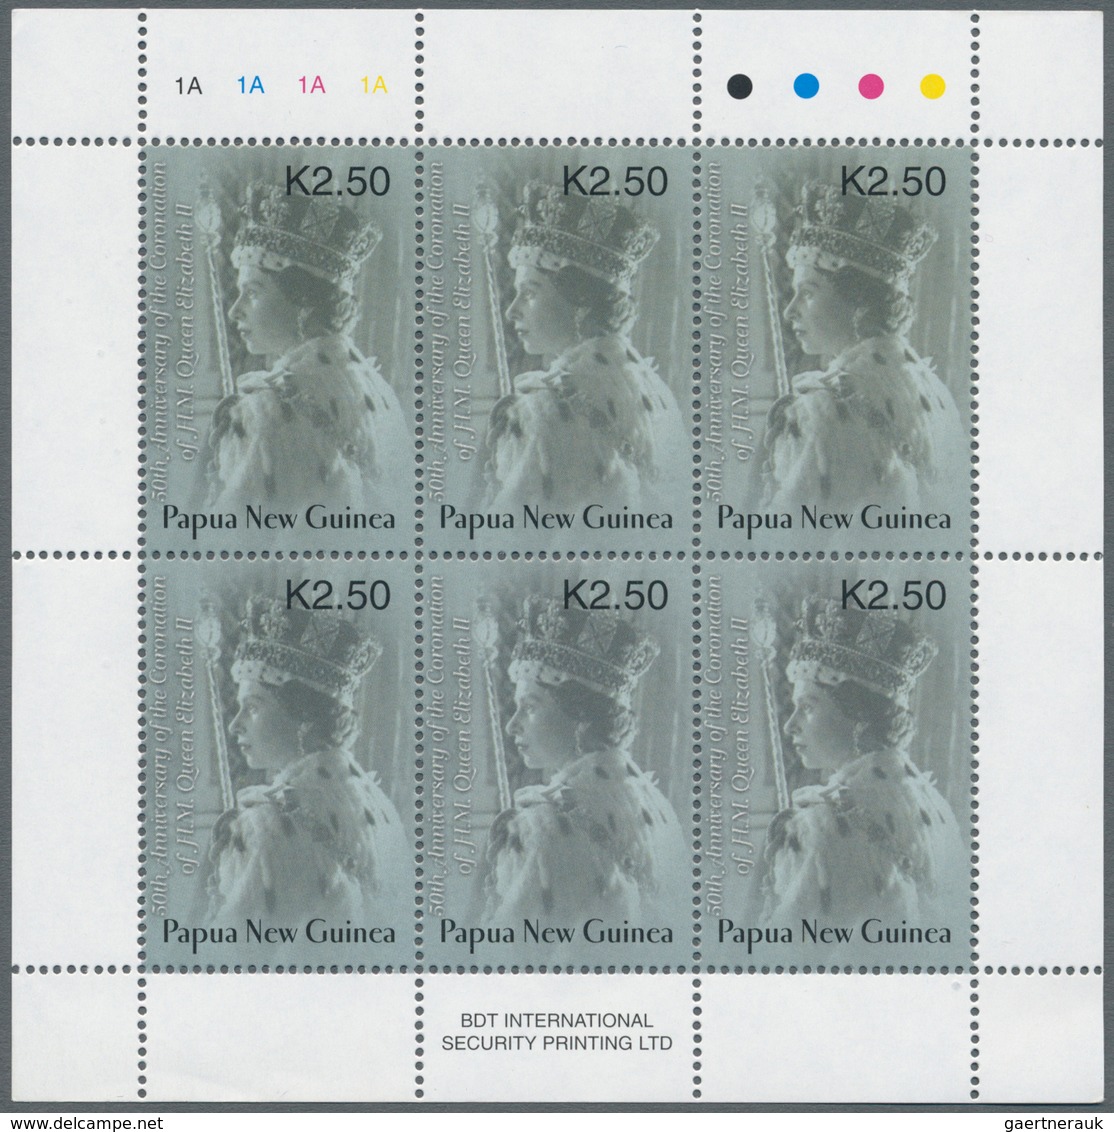 Thematik: Königtum, Adel / Royalty, Nobility: 2003, Papua New Guinea. Lot Of 3,000 Stamps "2.50k Que - Royalties, Royals